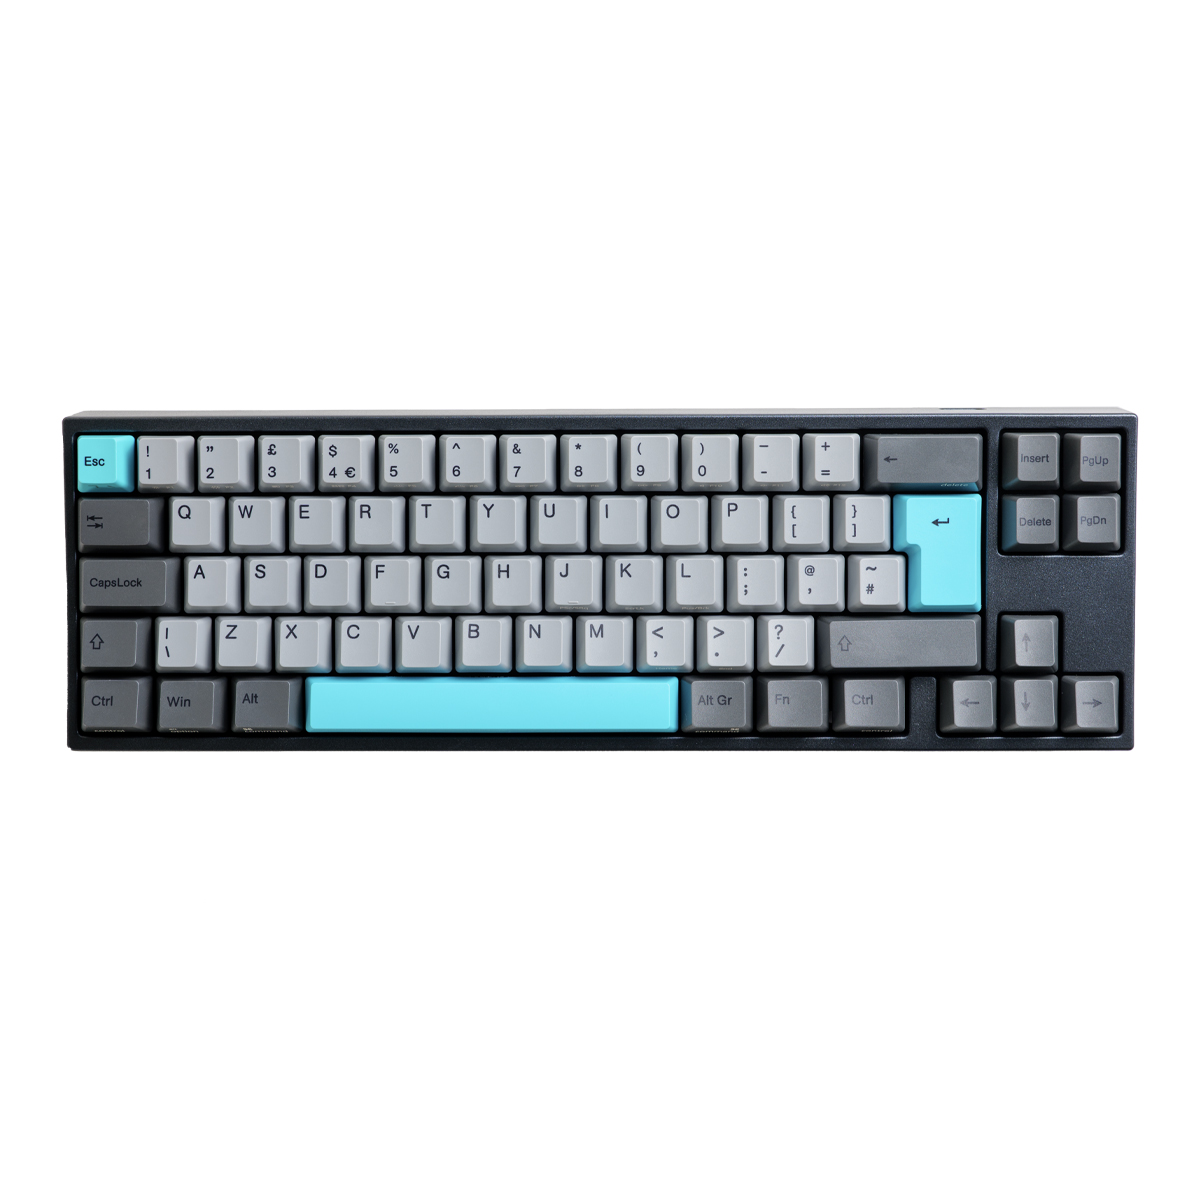 Ducky x Varmilo MIYA 69 Pro Moonlight 65% Cherry MX Blue Switch Gaming Keyboard